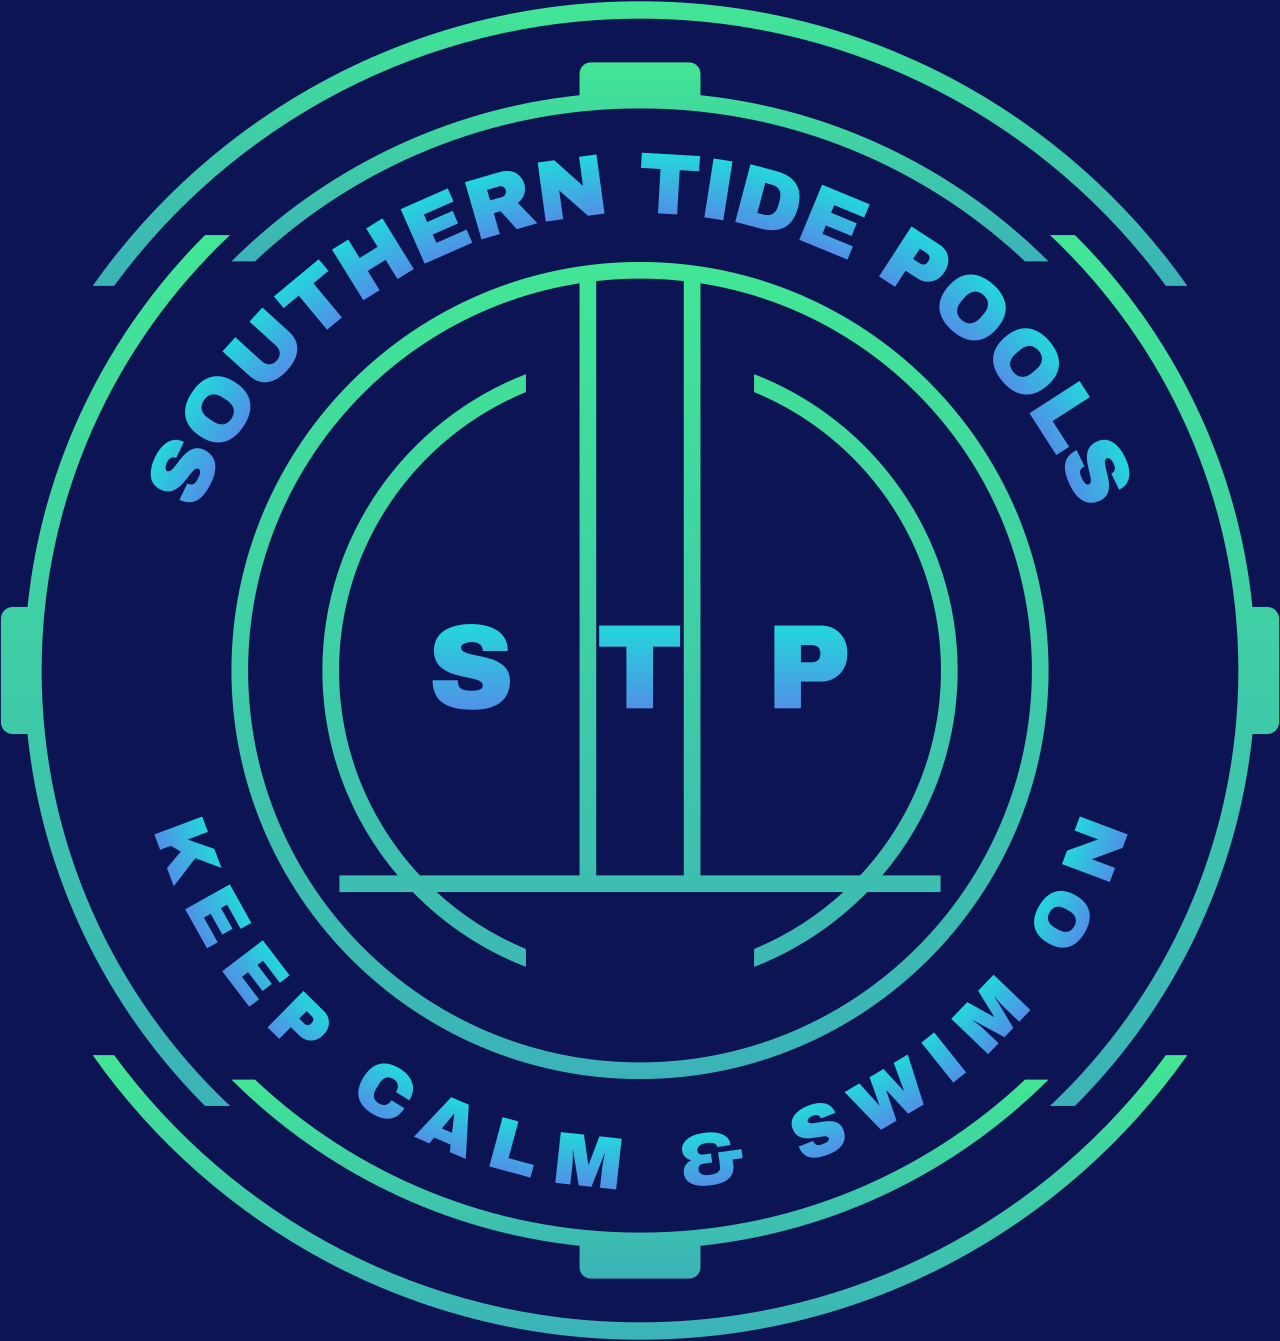 SOUTHERN TIDE POOLS's logo